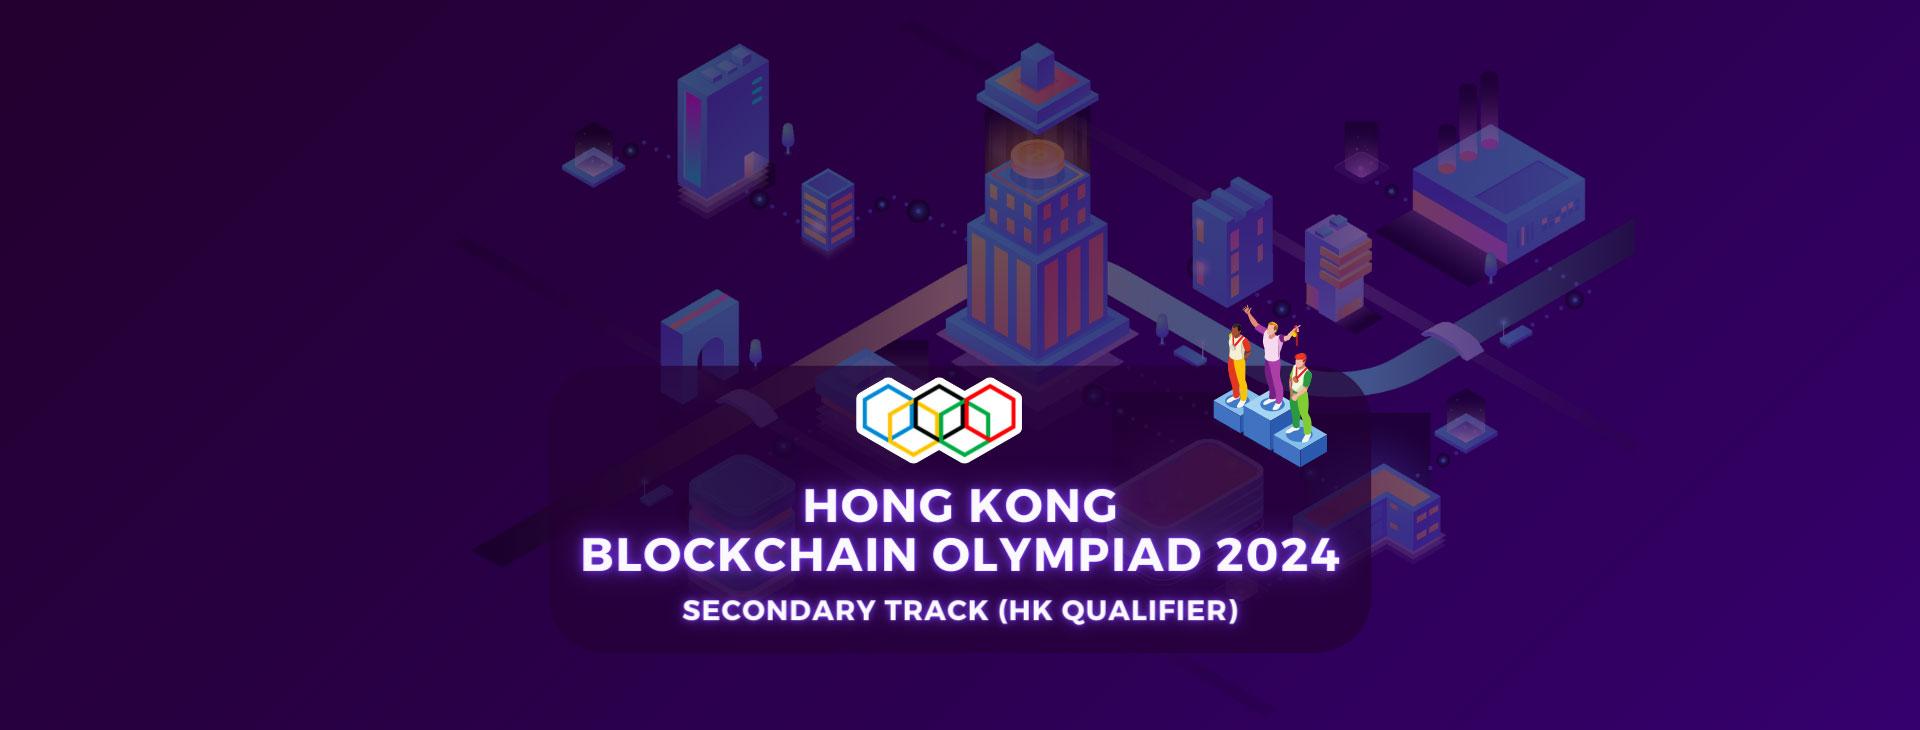 <b>香港区块链奥林匹克 2024</b><br>(中学组)